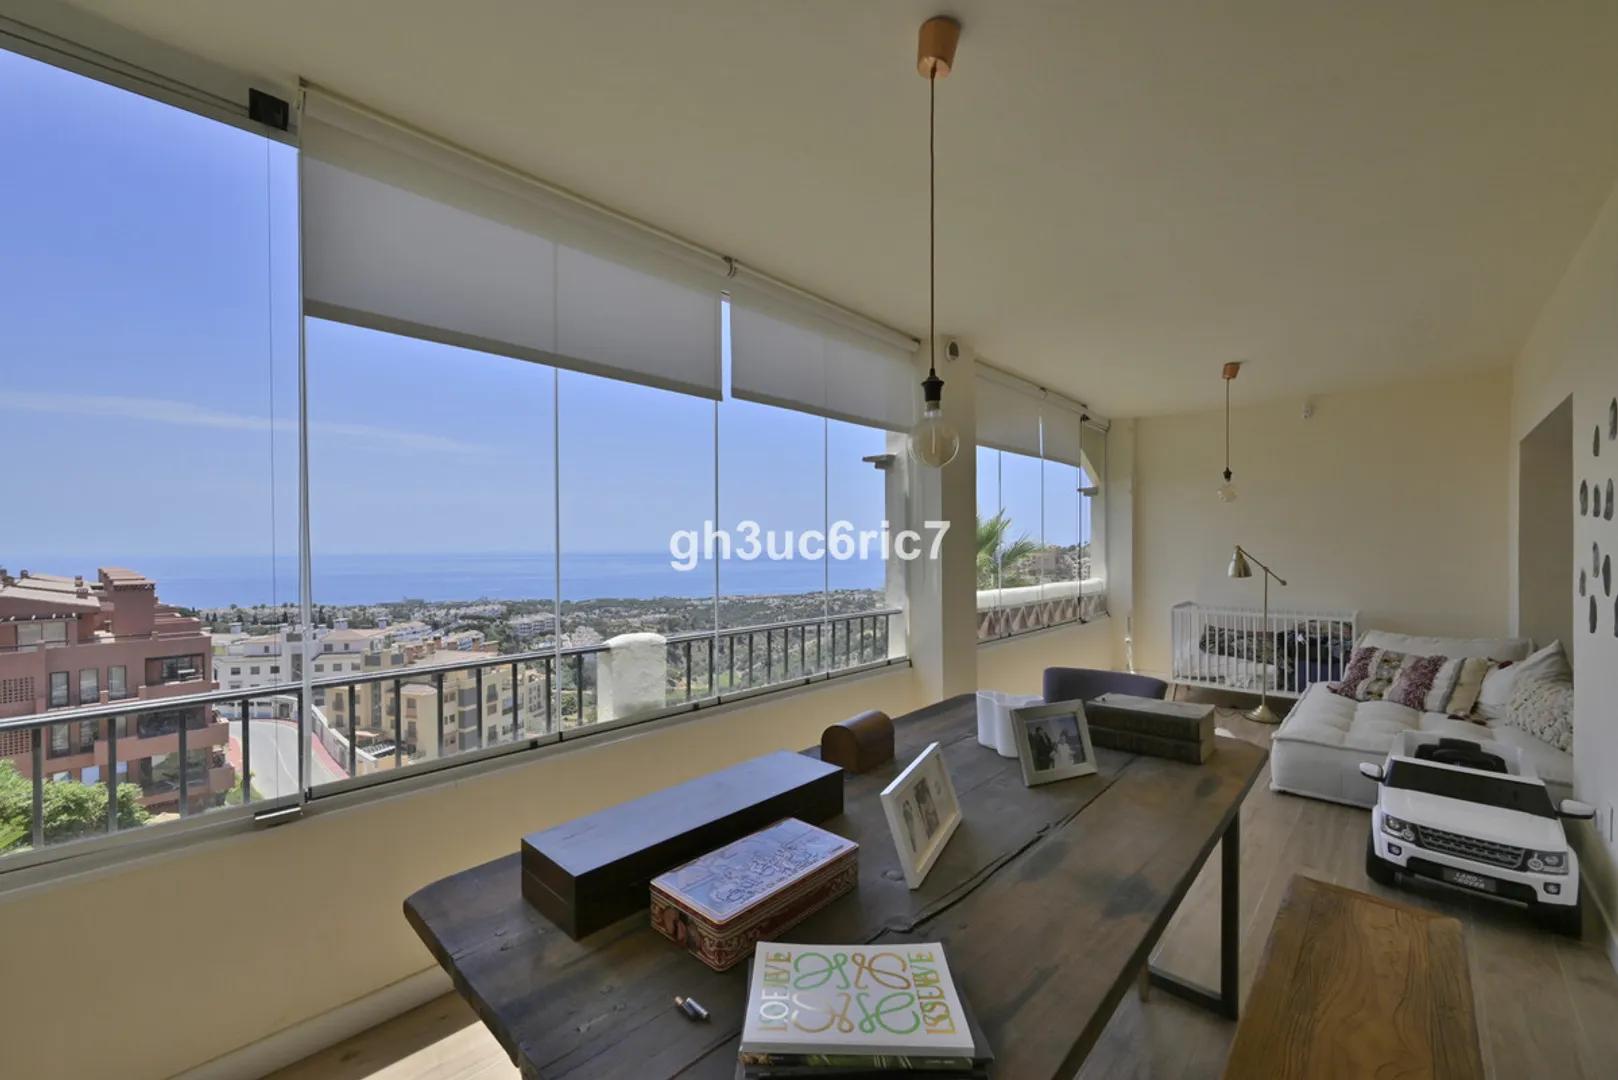 Spectacular ground floor apartment with sea views in Calahonda